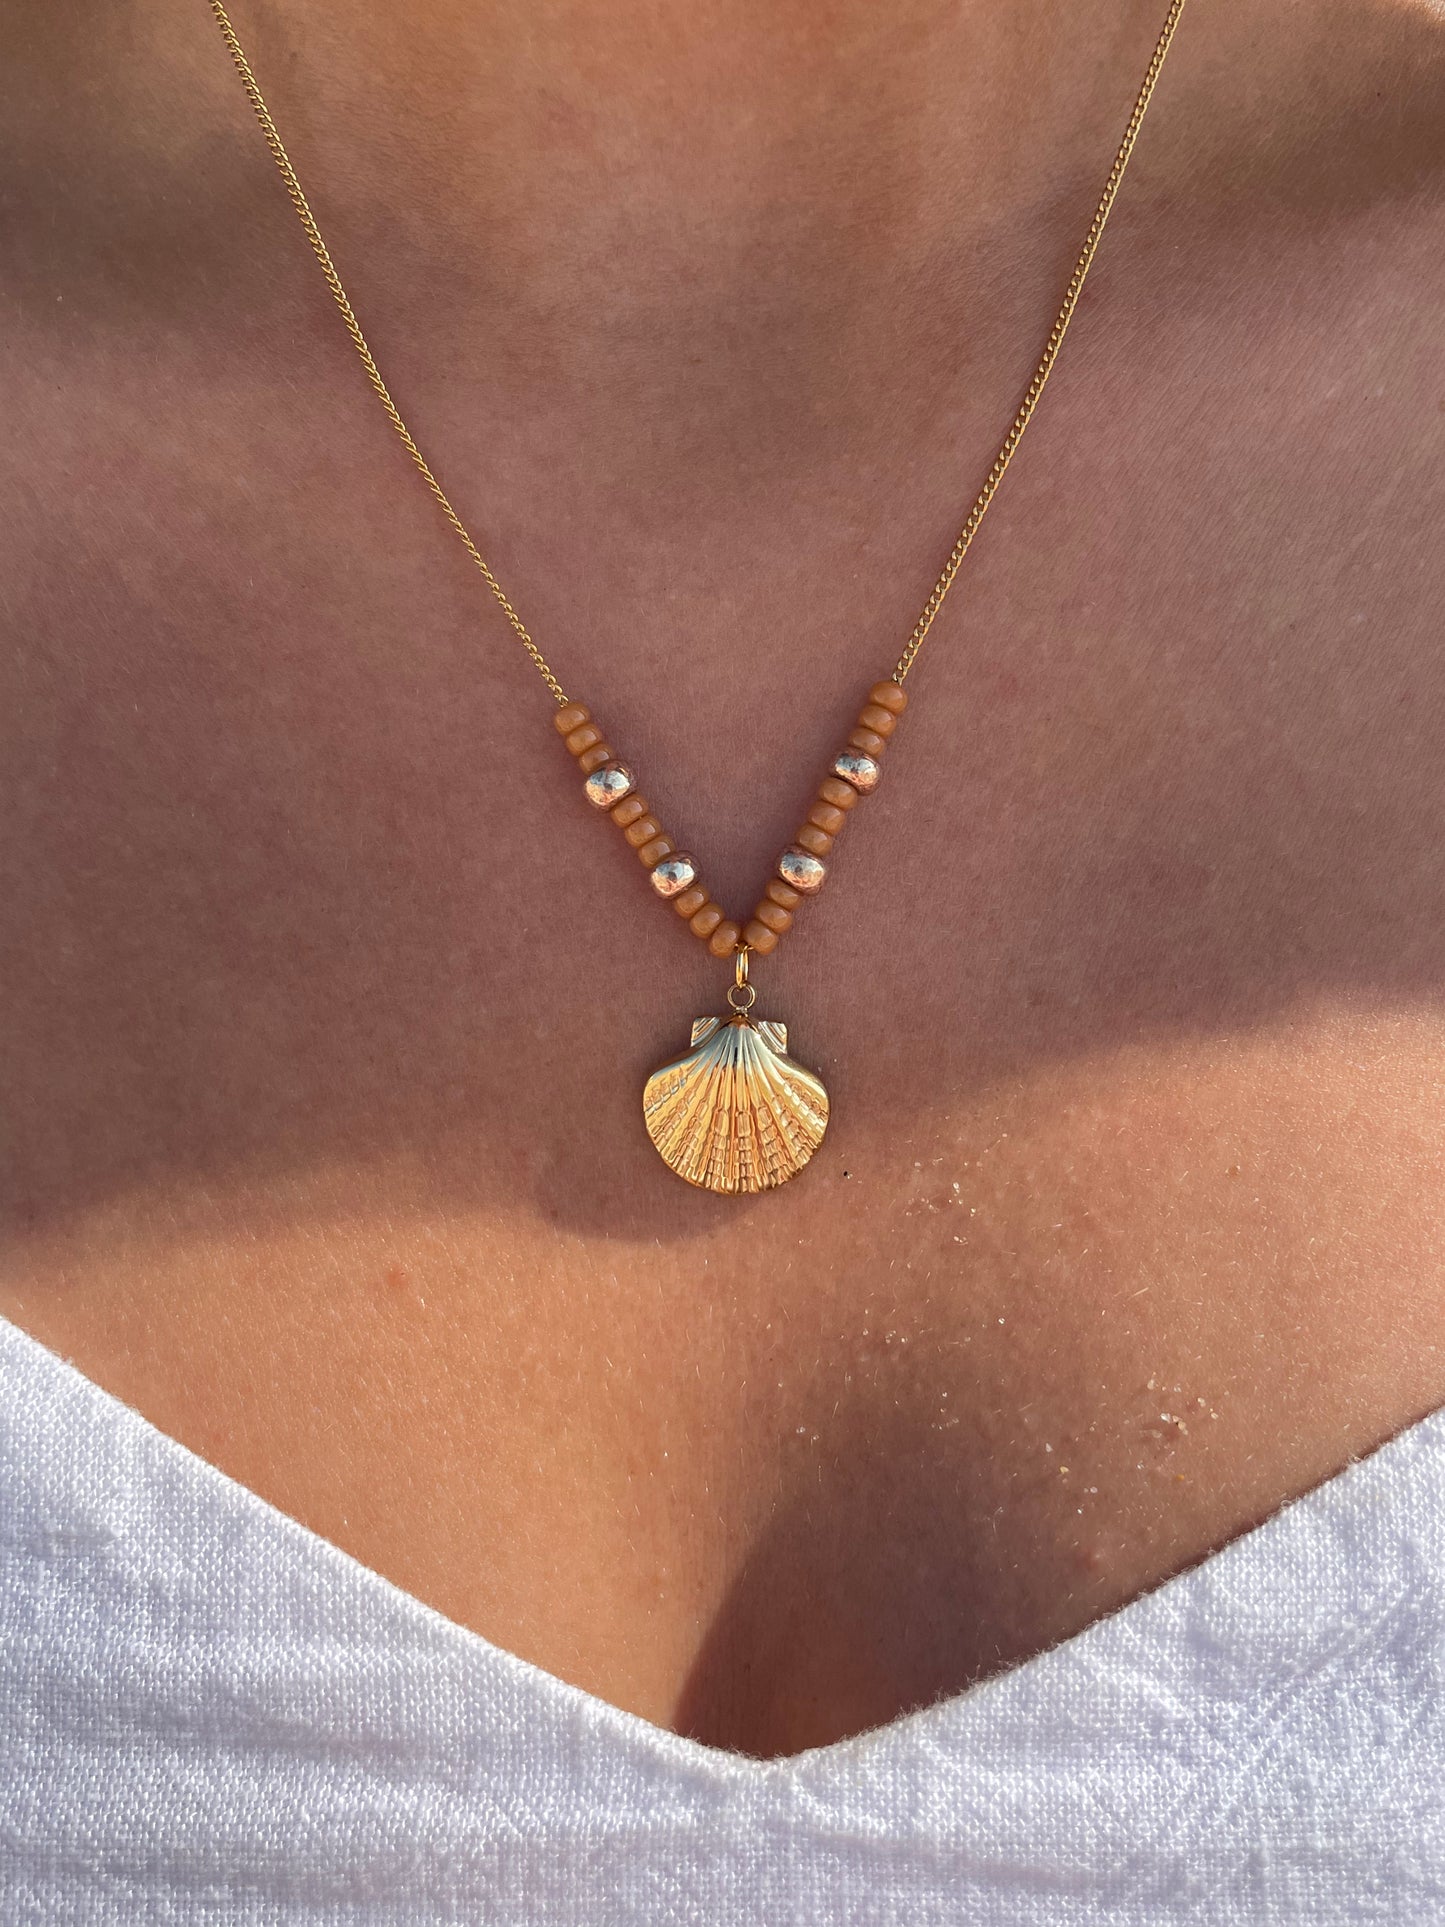 Seashell necklace tangerine